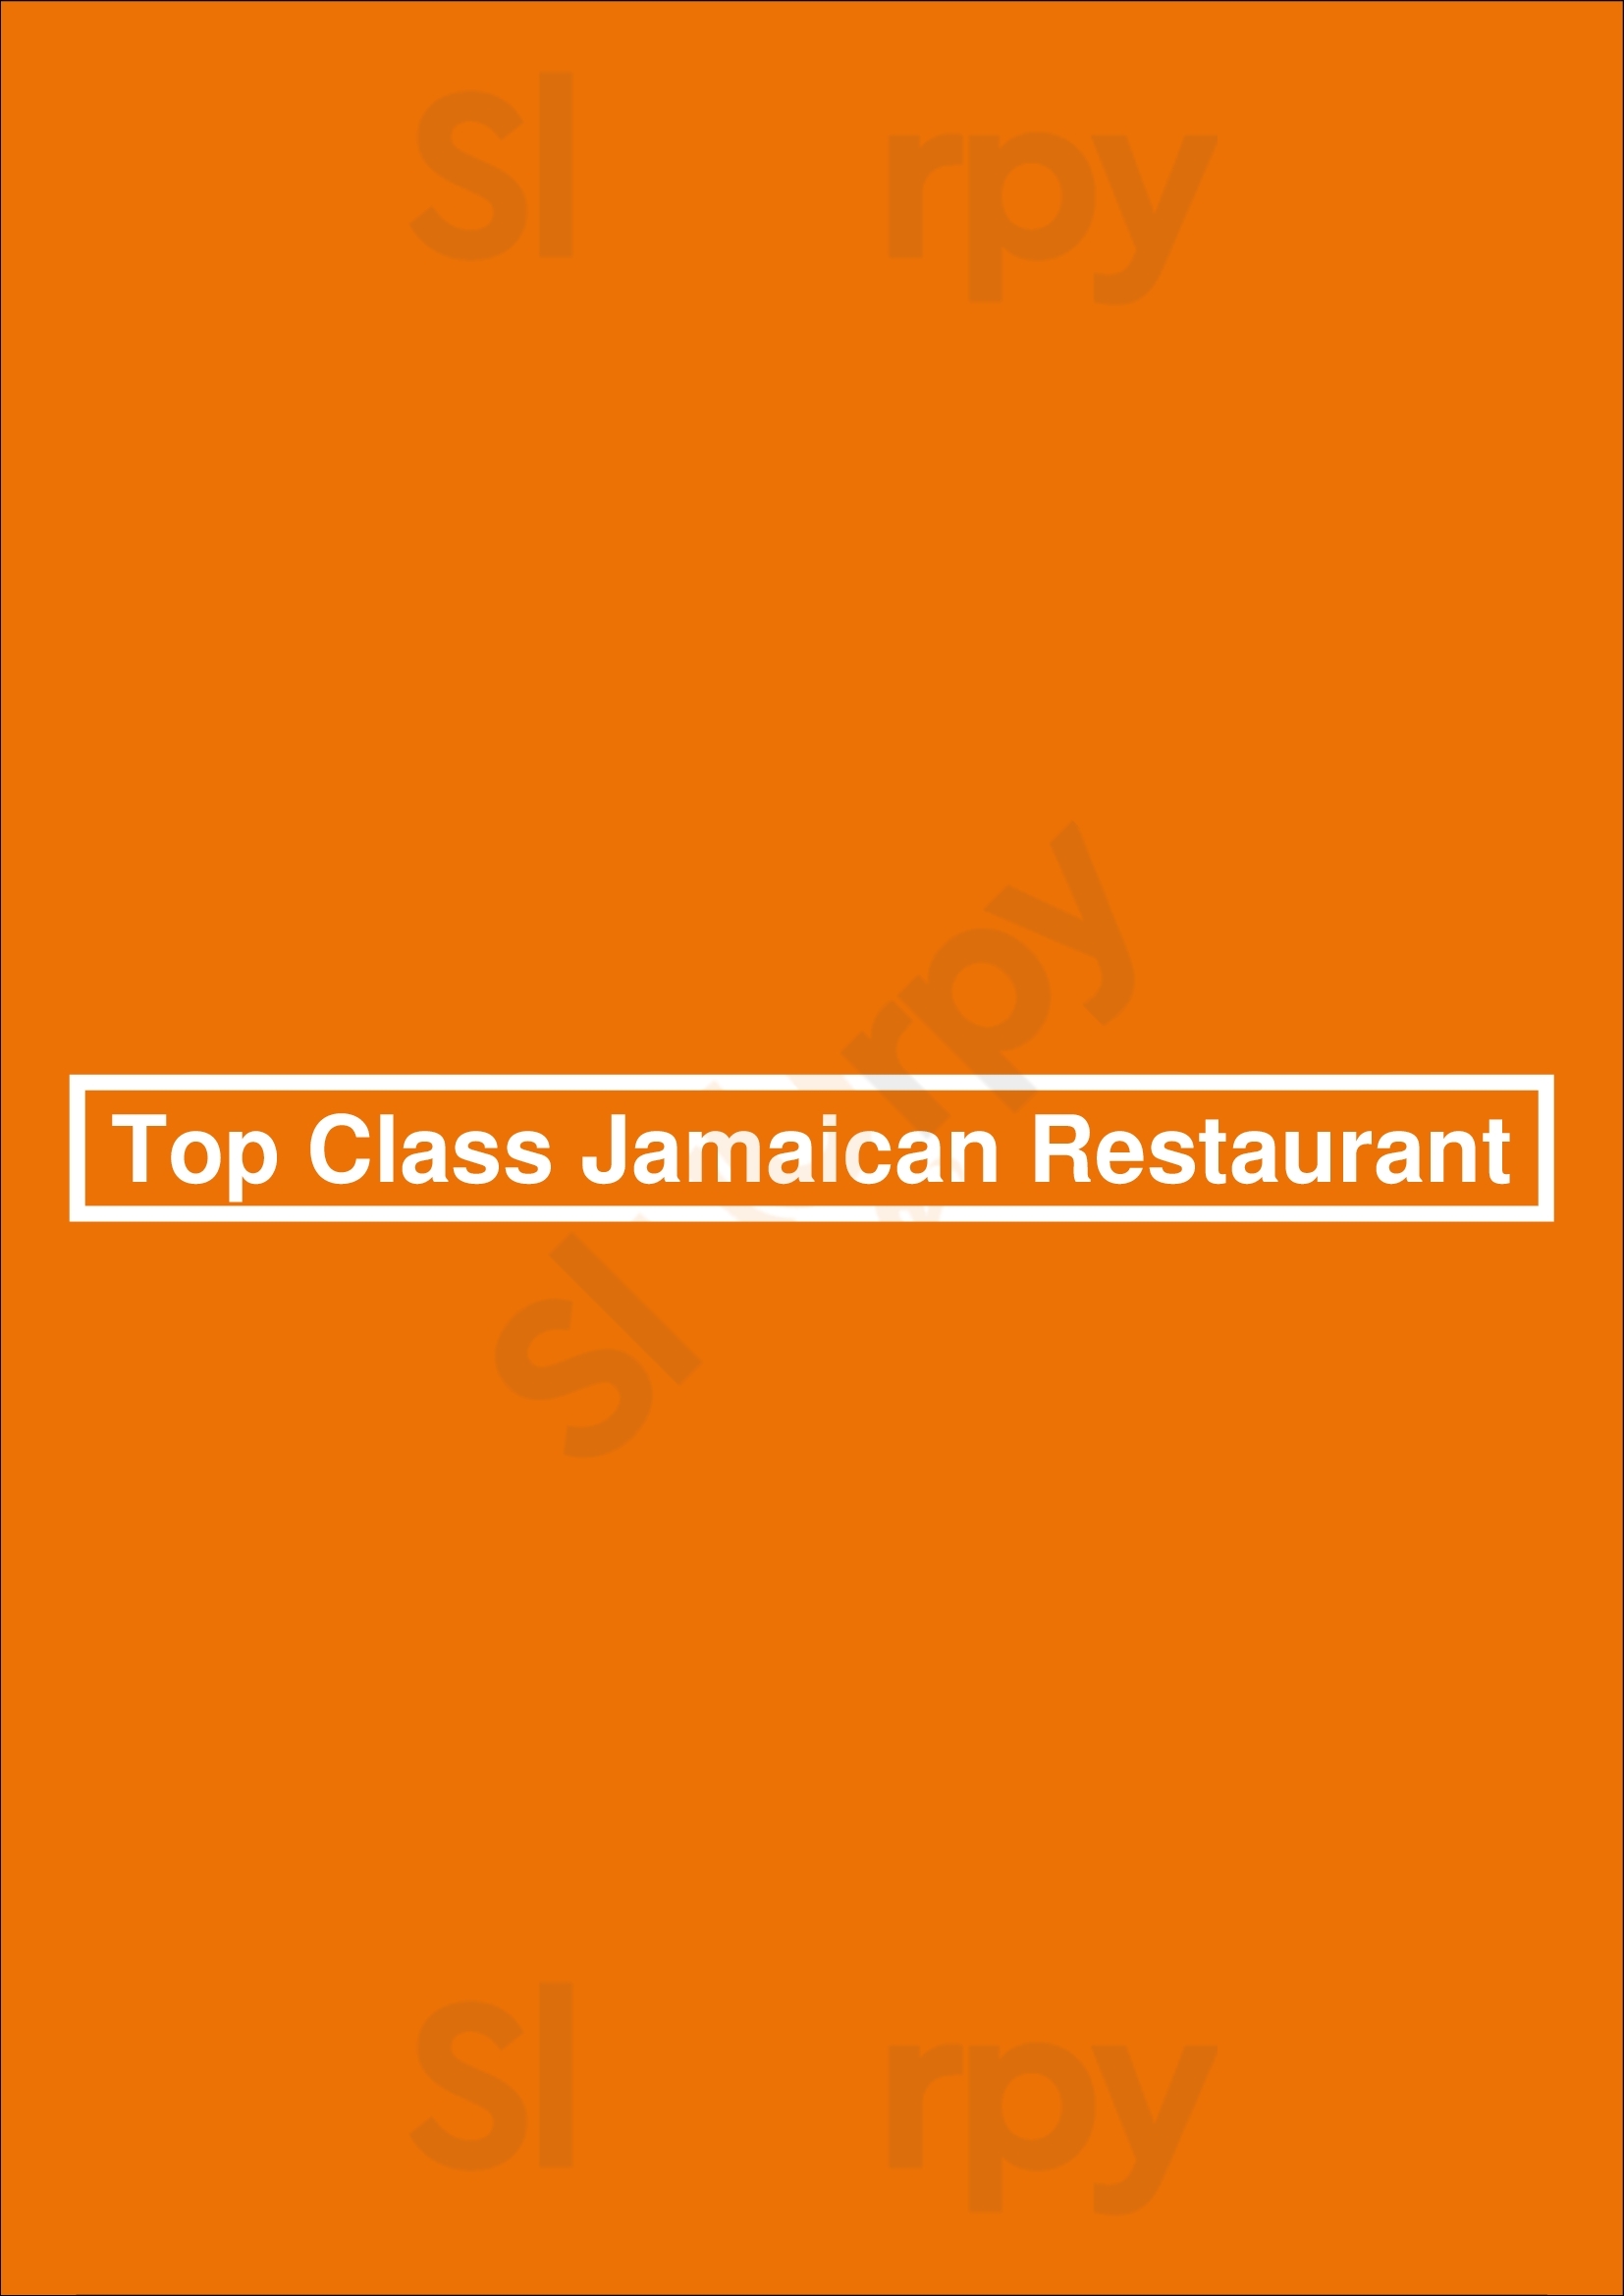 Top Class Jamaican Restaurant Orlando Menu - 1